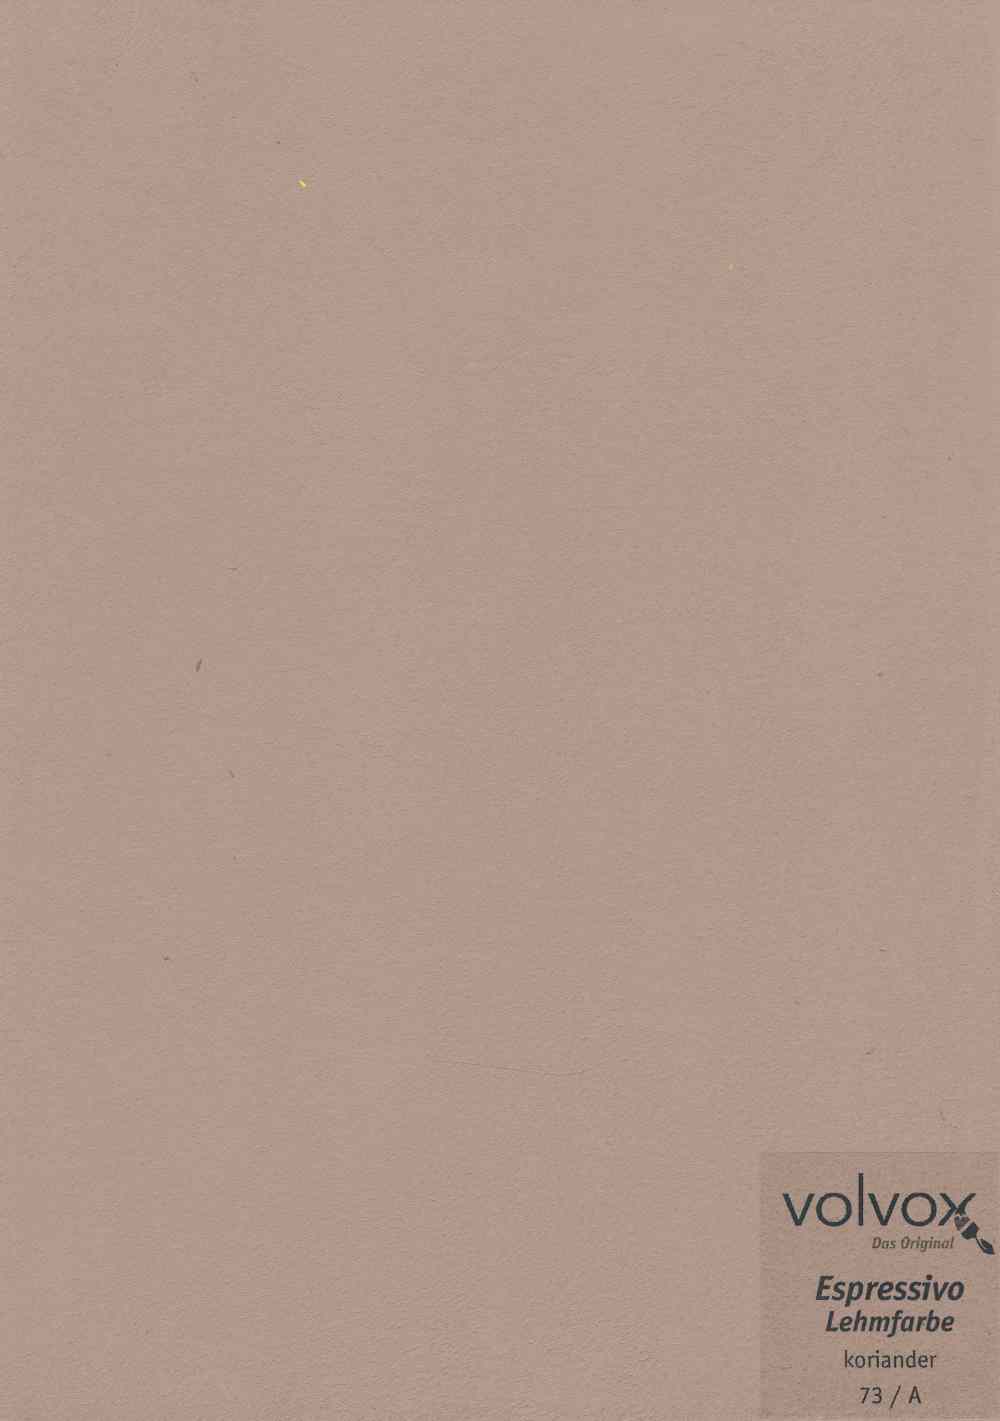 Volvox Espressivo Lehmfarbe 073 koriander 